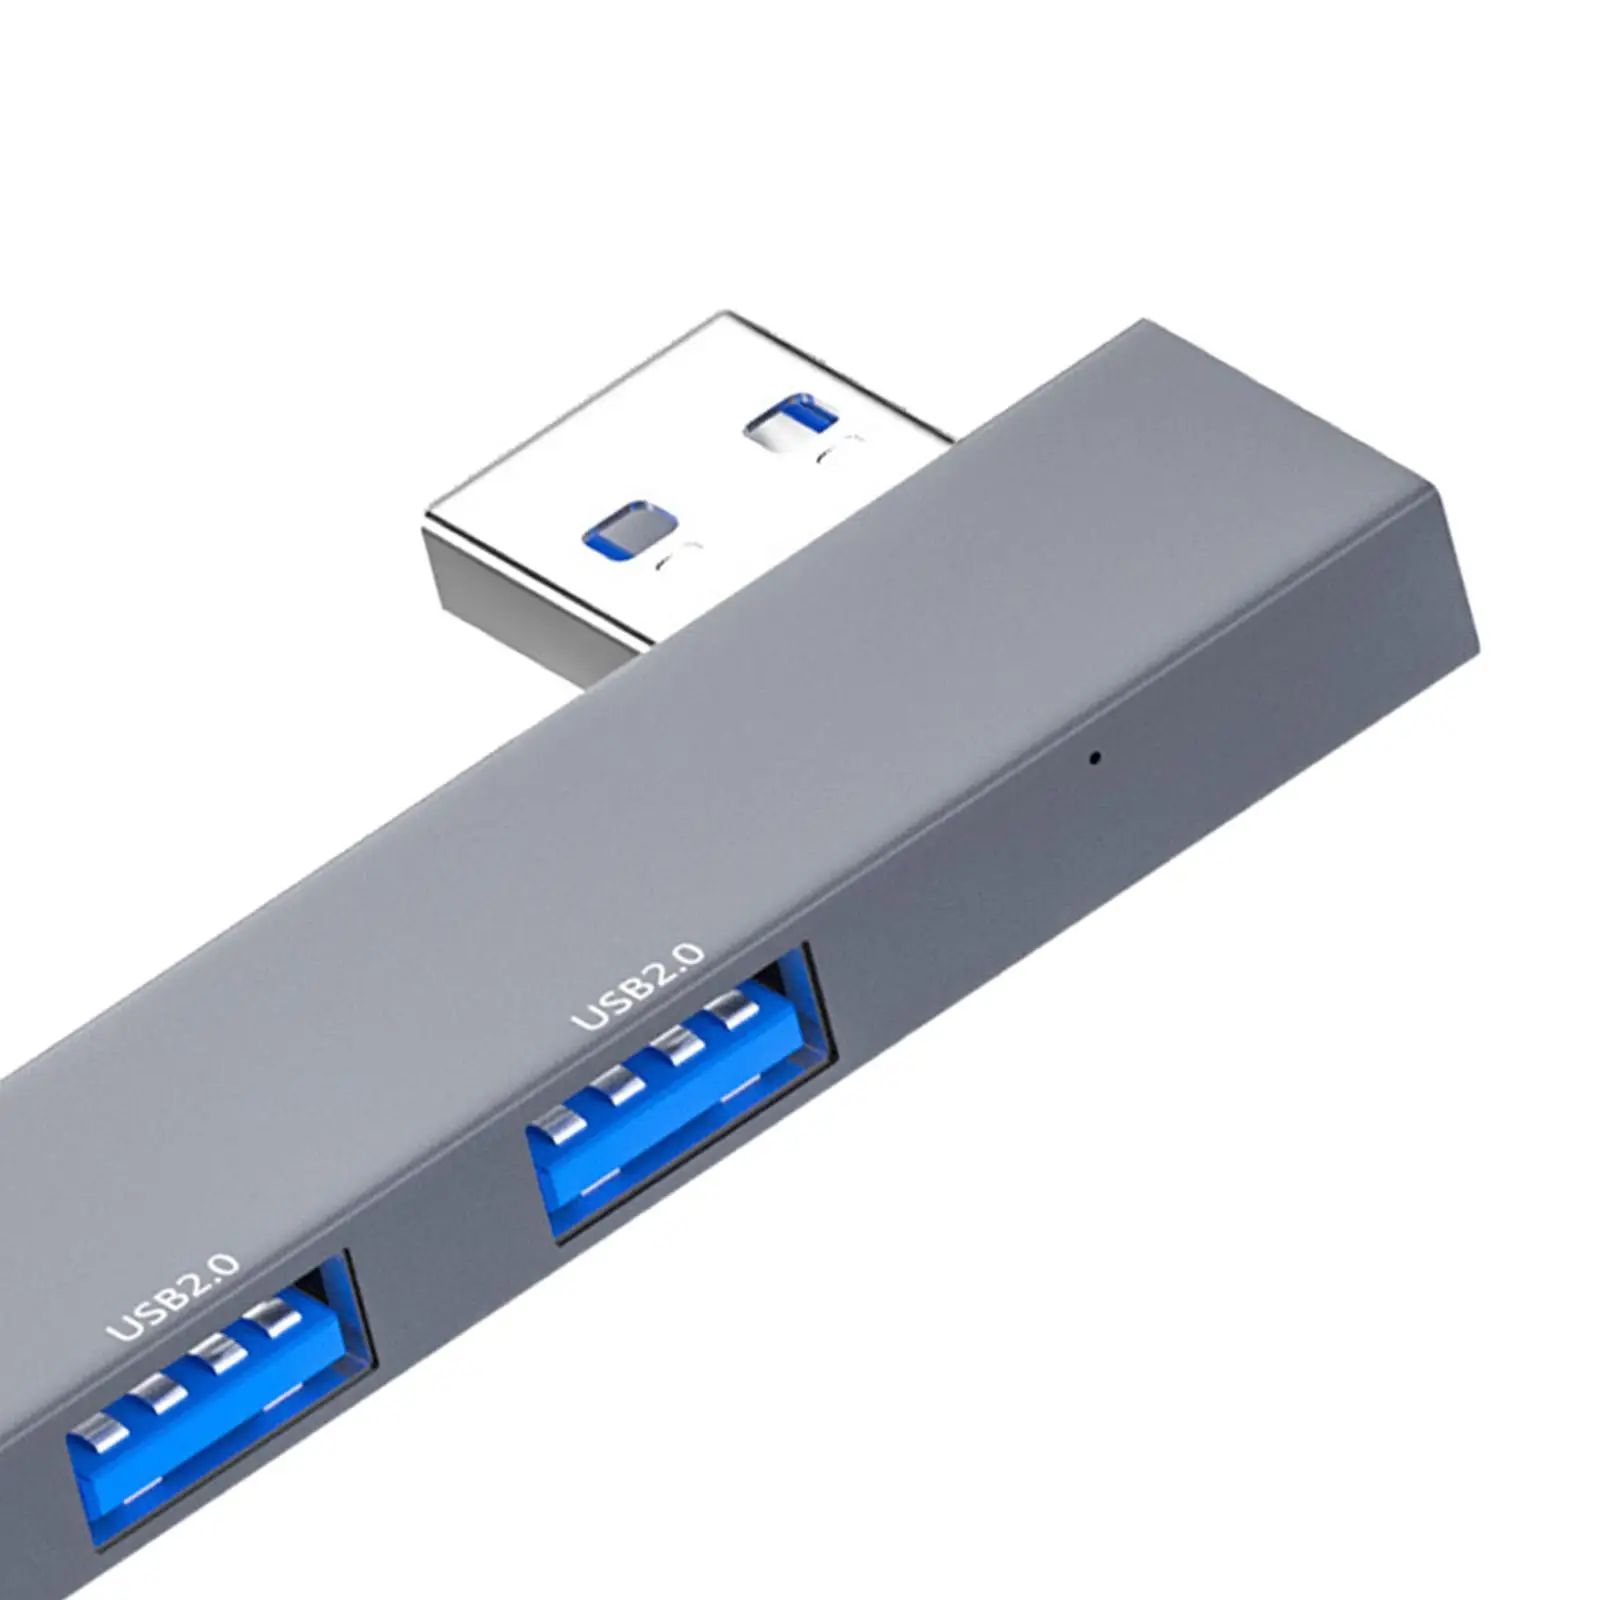 USB Hub USB Expander Compact, 3 in 1, Portable Data Transfer, USB Splitter USB Adapter for Printer Laptop Flash Drive